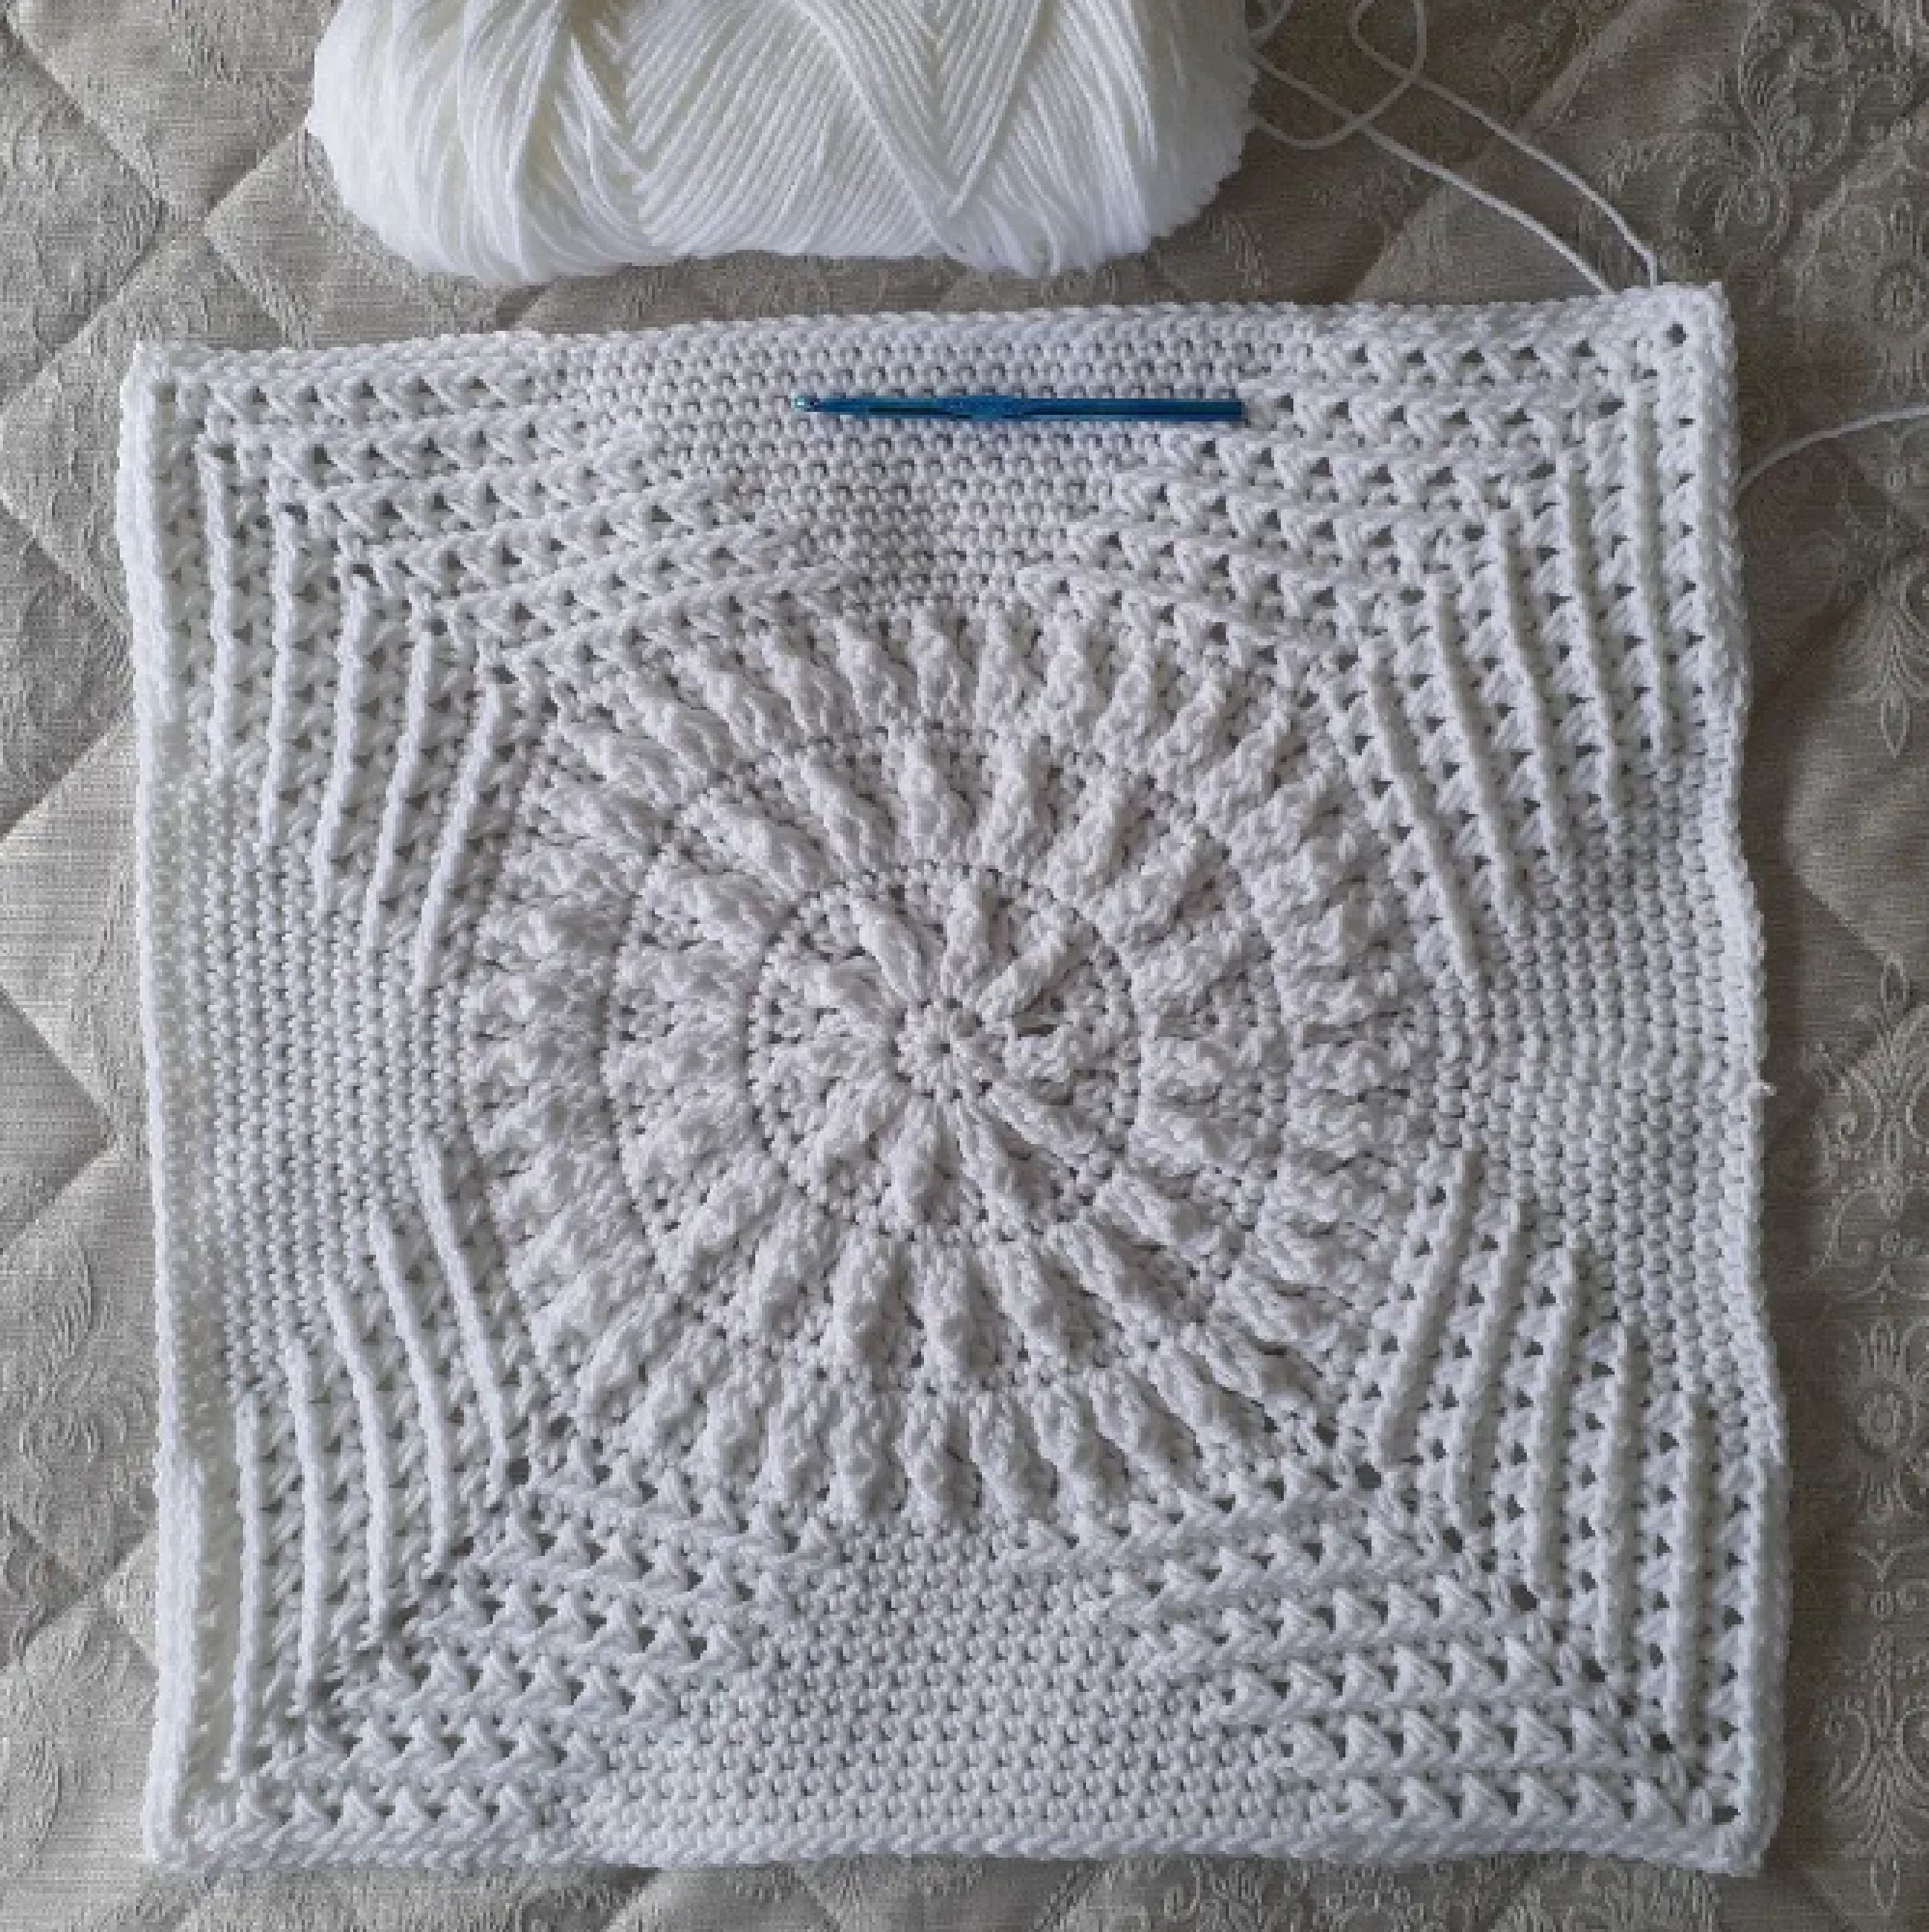 Blanket Binding Afghan Edging.wps - Priscilla's Crochet